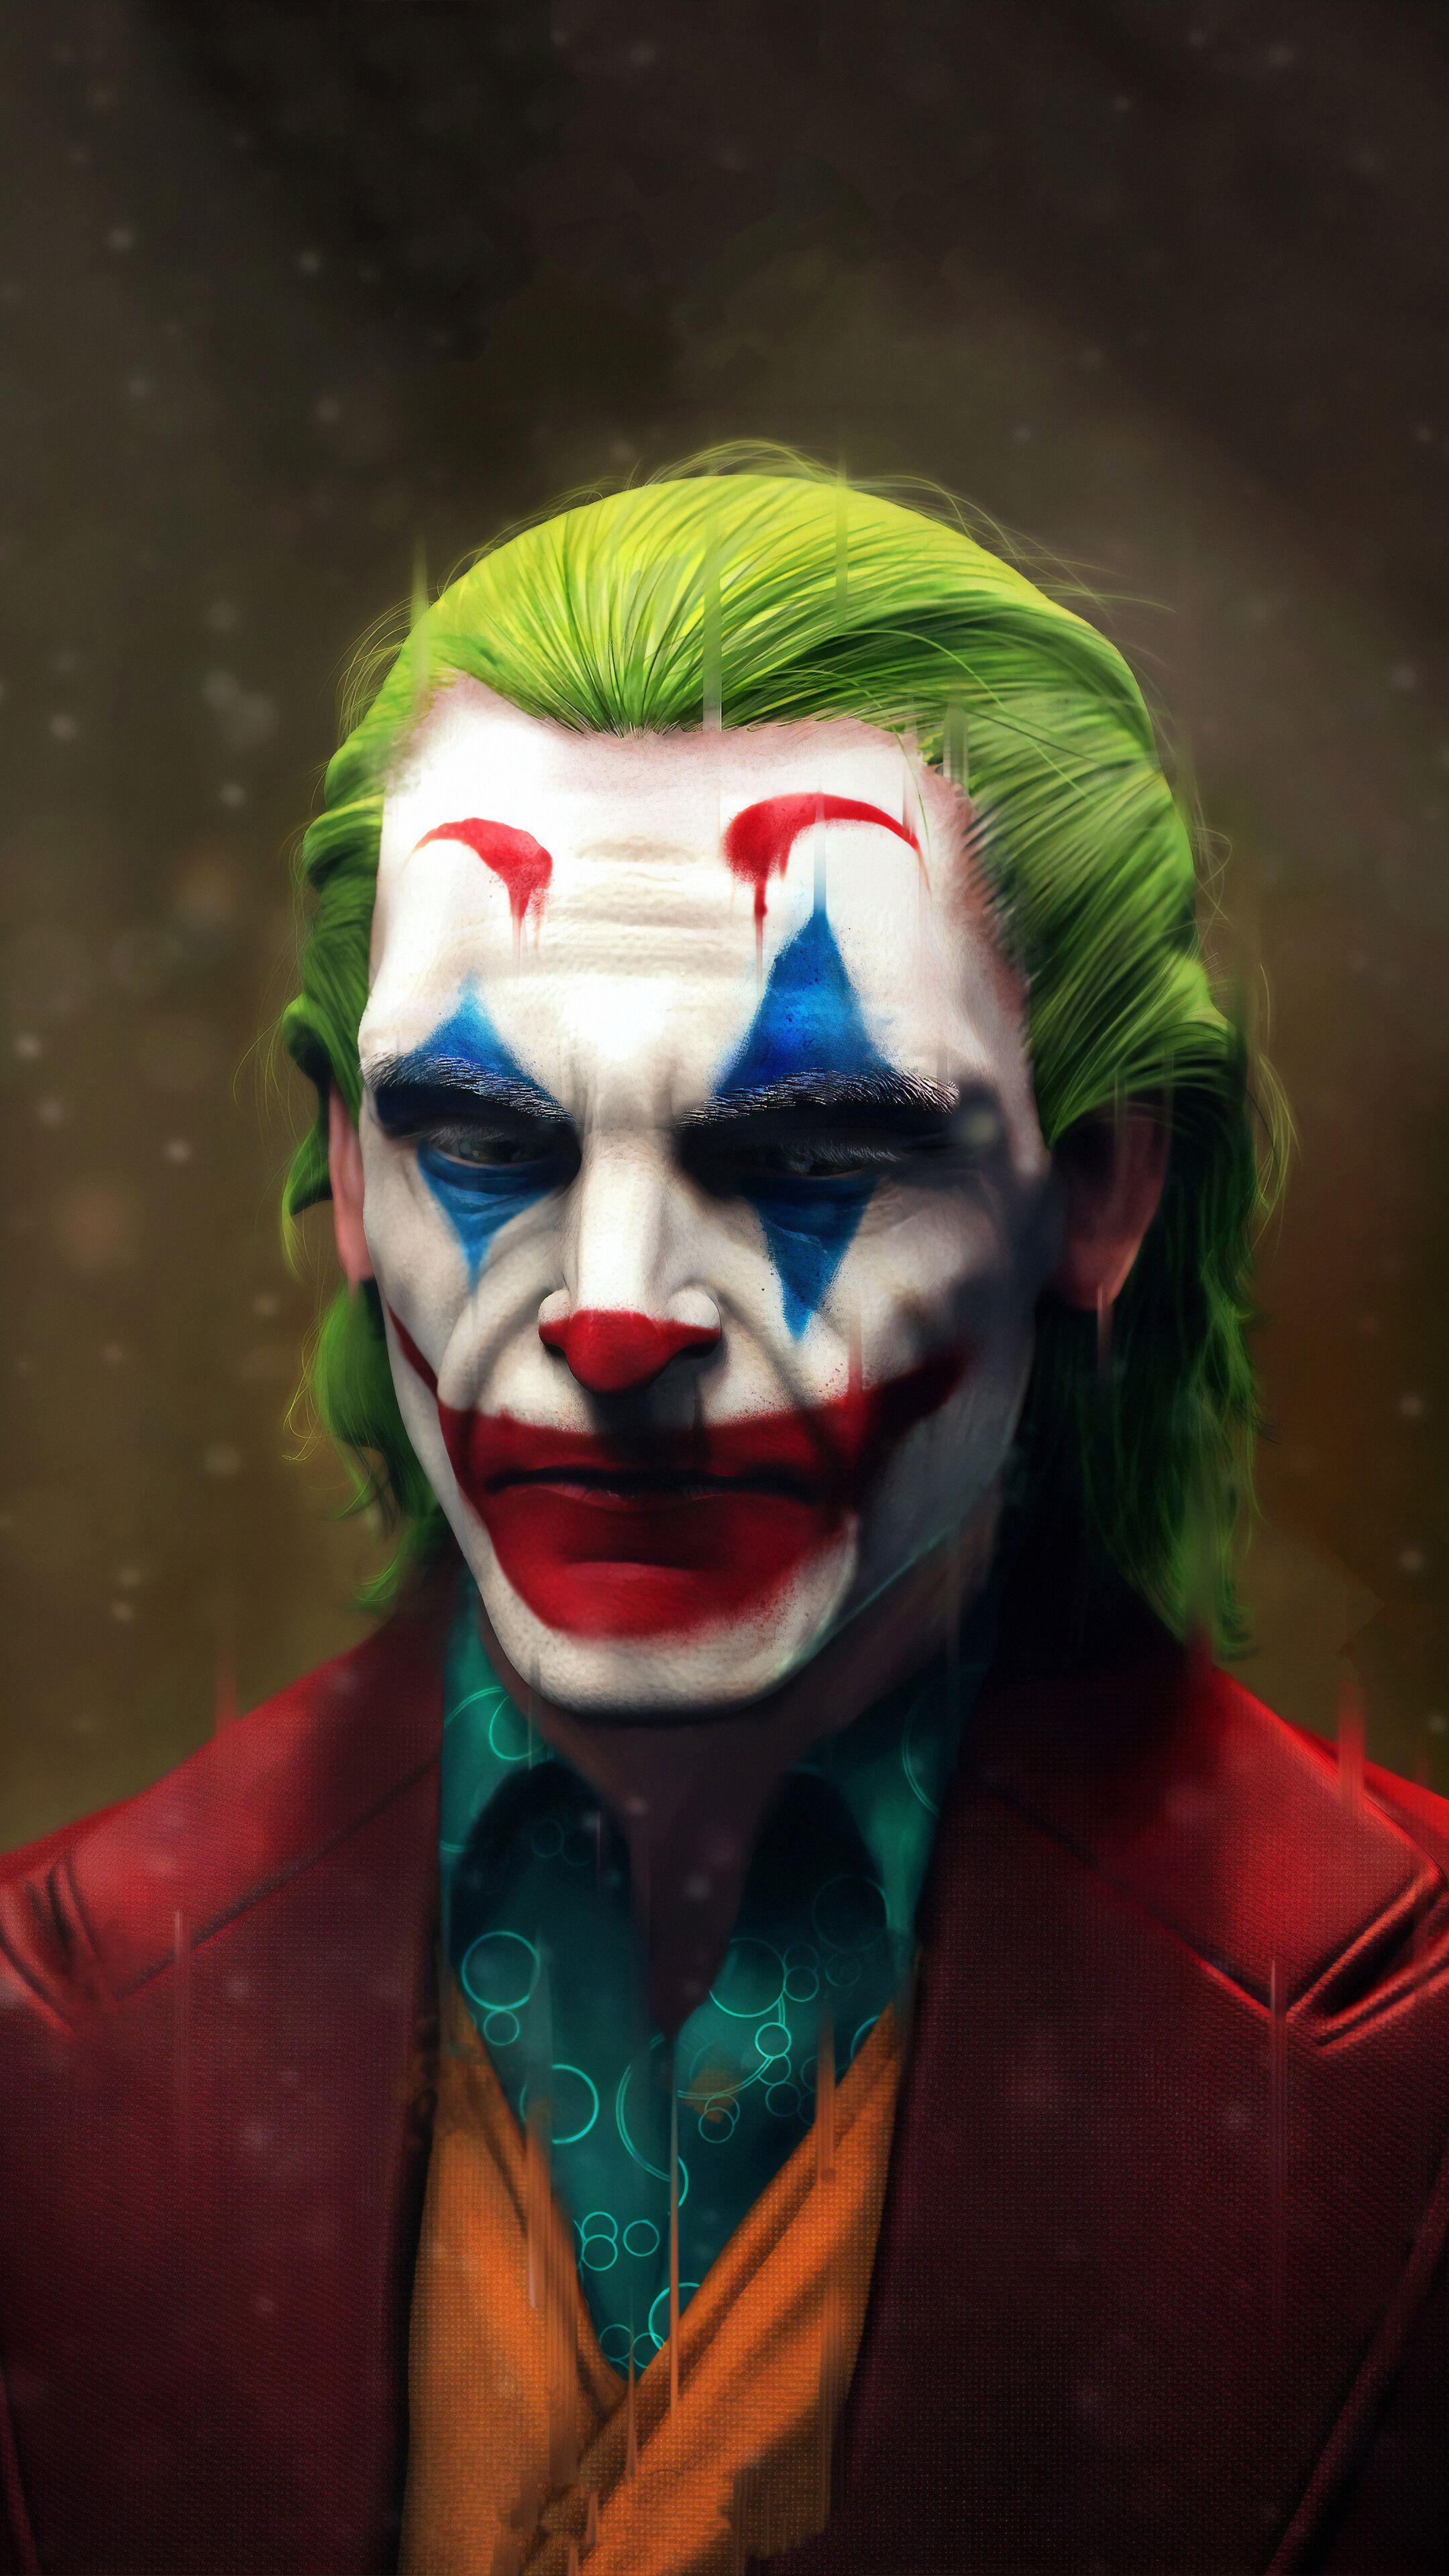 Joker 2019 iPhone HD Wallpapers - Top Free Joker 2019 iPhone HD ...